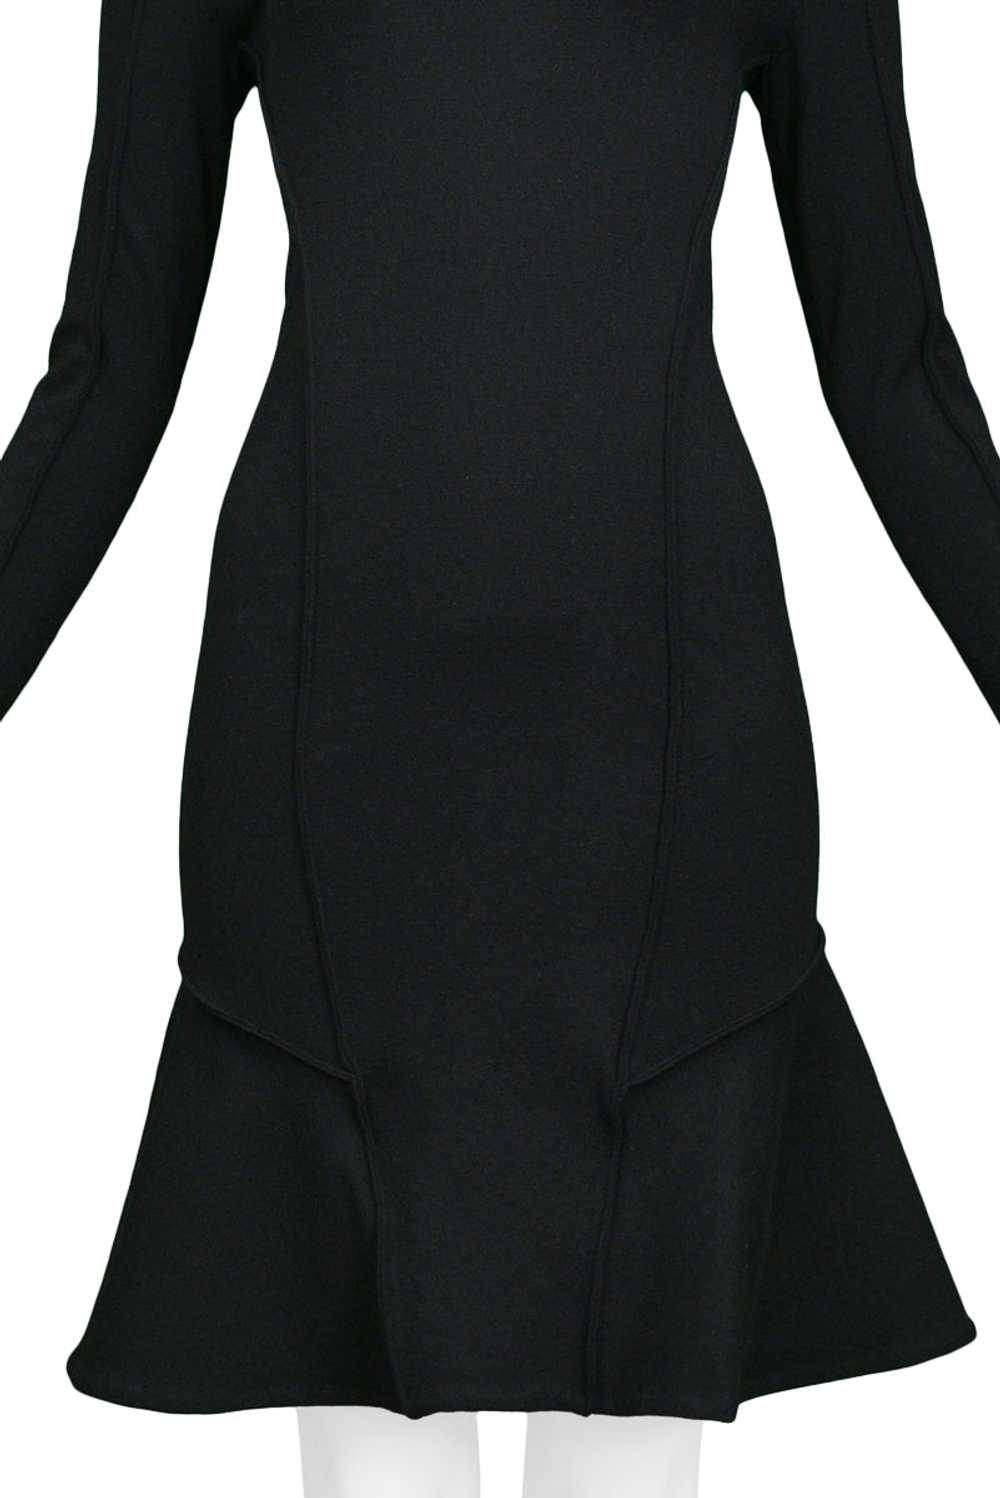 BALENCIAGA BY GHESQUIERE BLACK SCUBA DRESS WITH F… - image 3